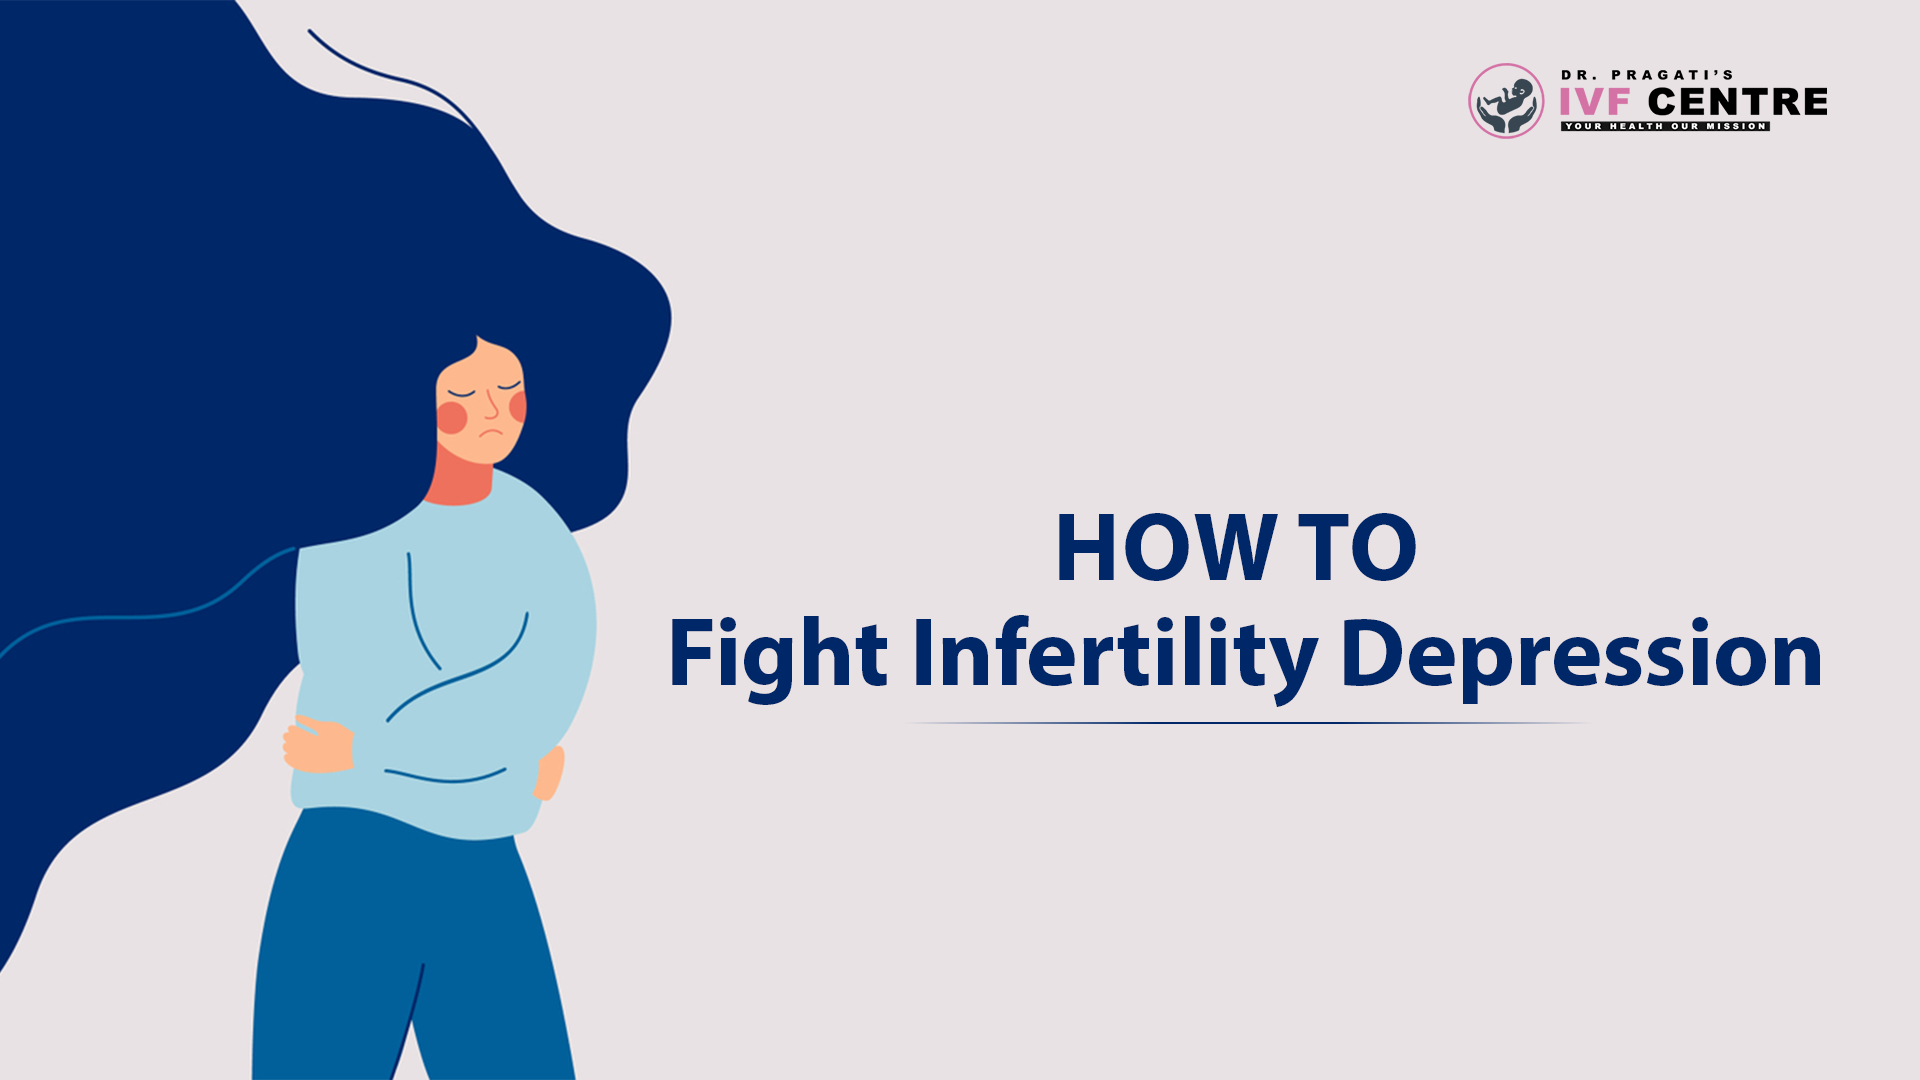 How To Fight Infertility Depression Dr Pragati Ivf Centre